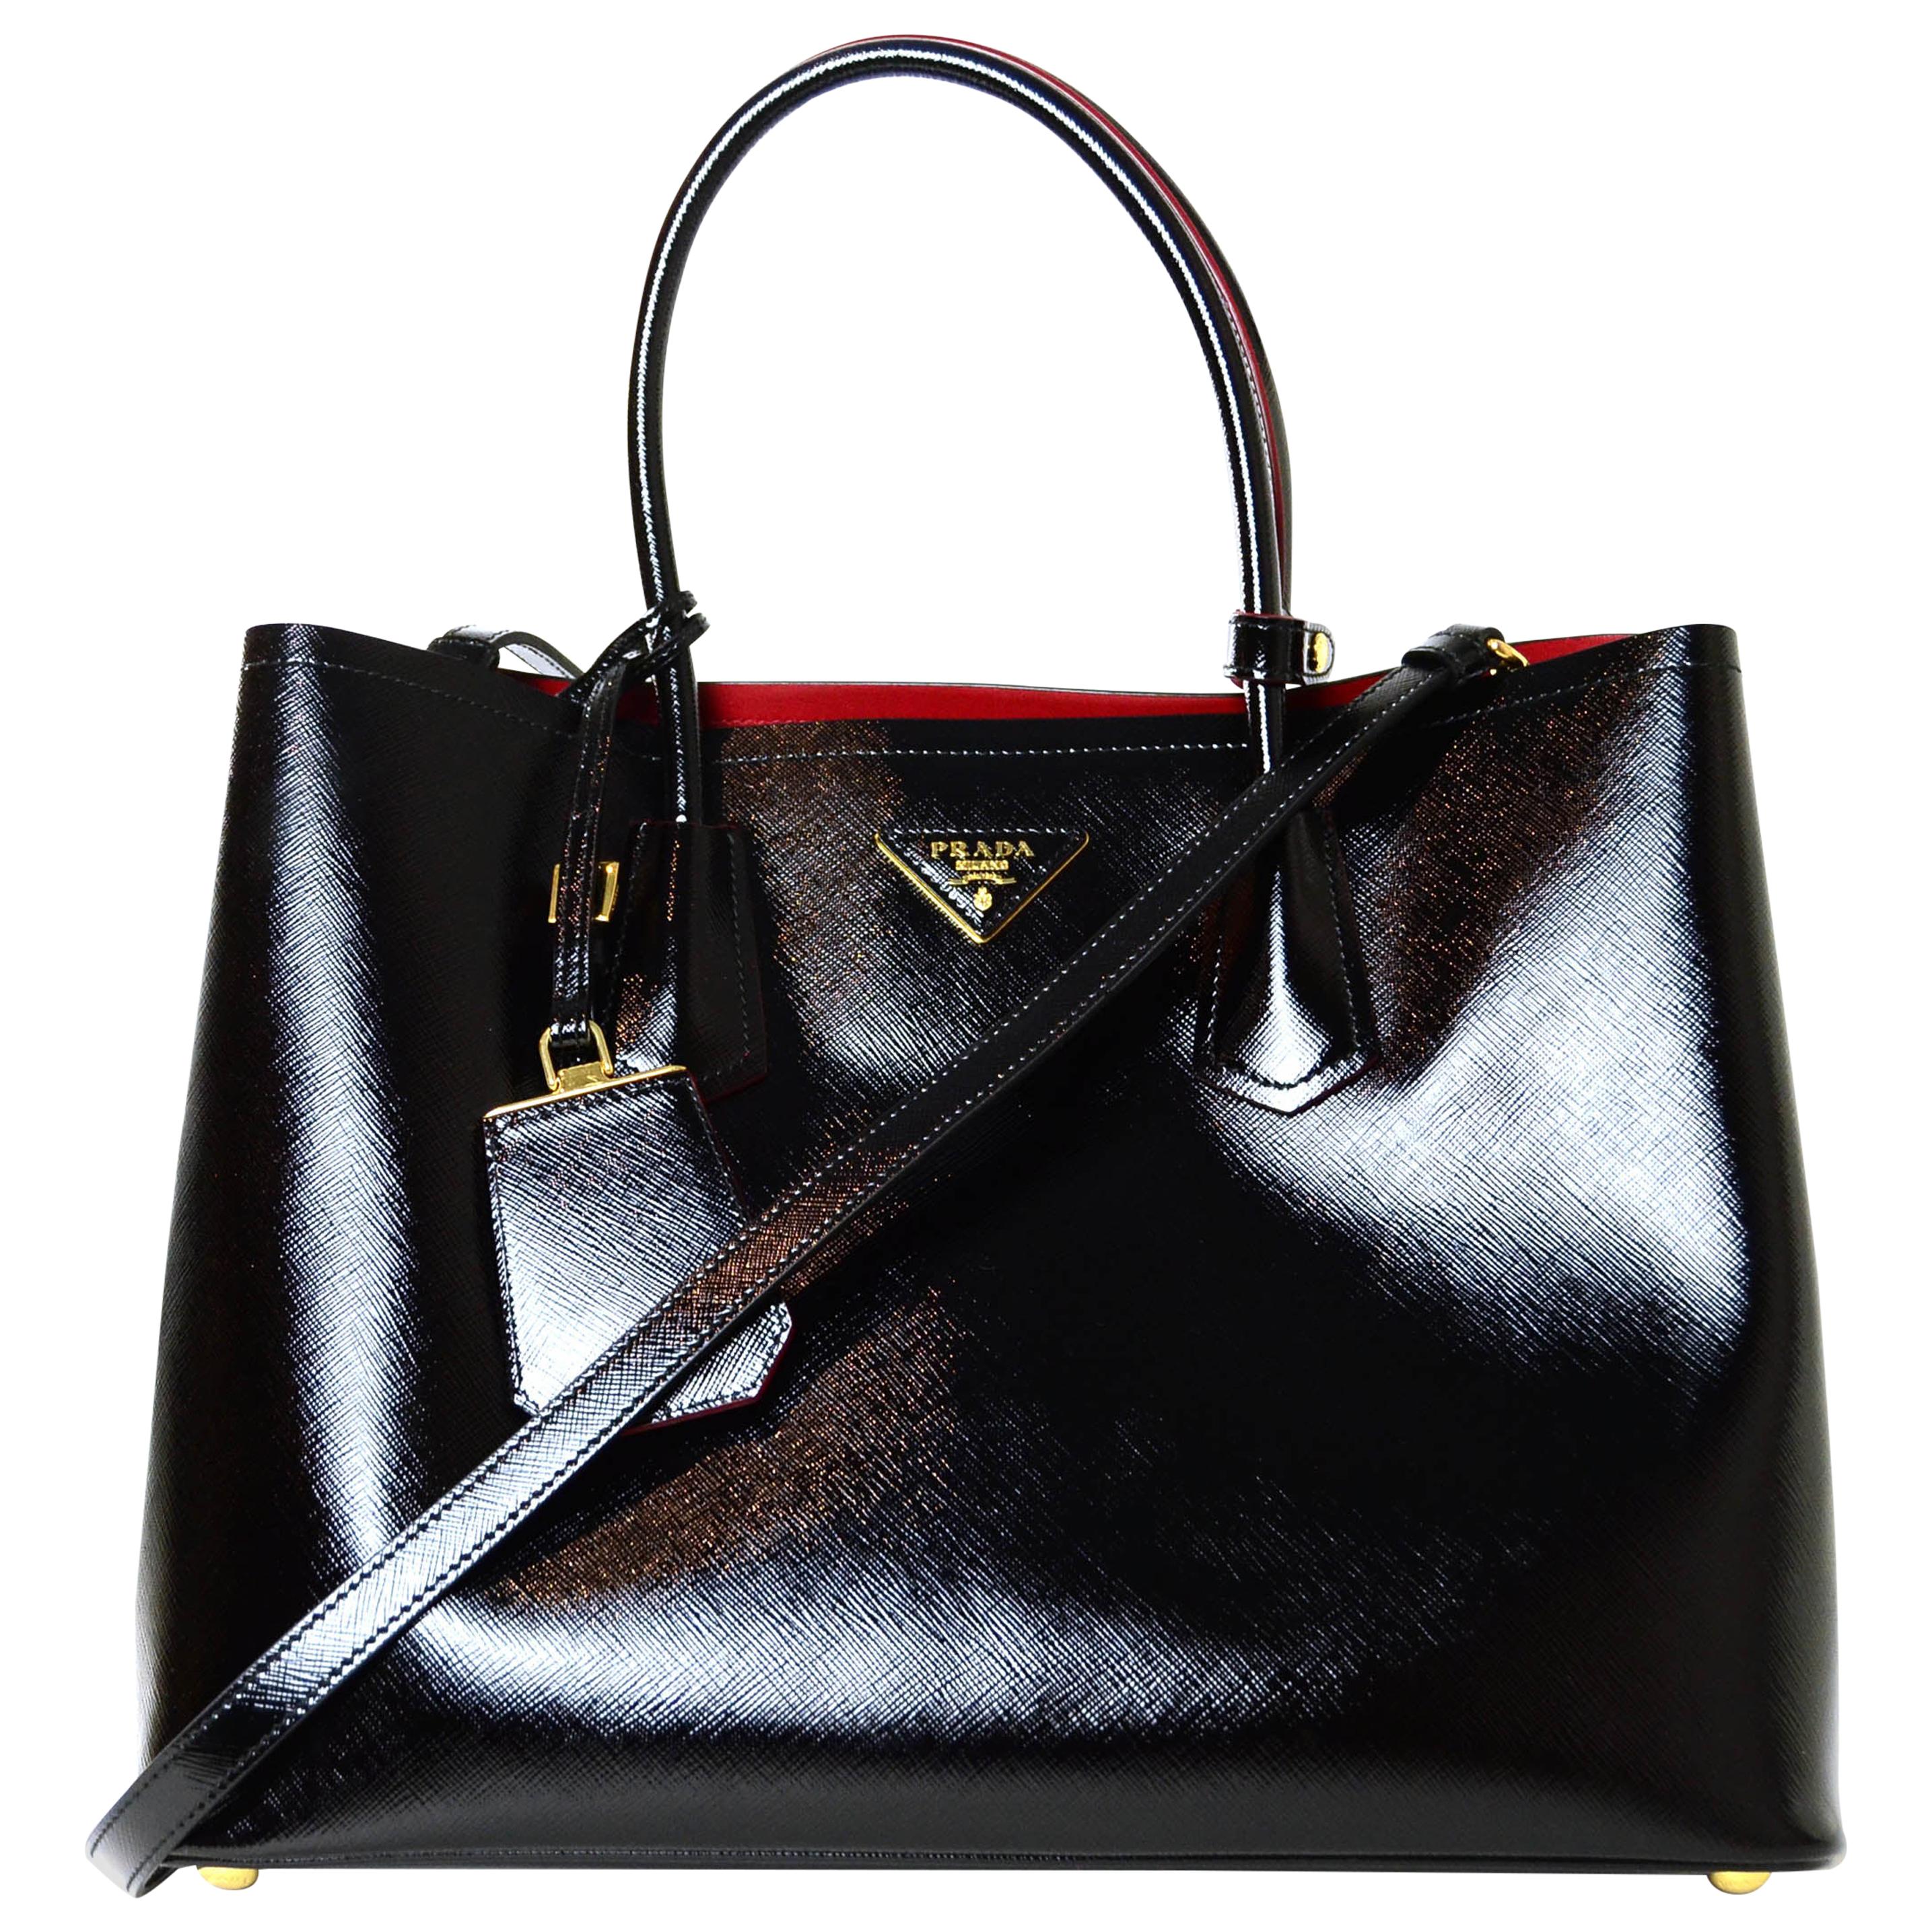 Prada Black/Red Saffiano Vernice Shiny Leather Double Handle Tote Bag w/ Strap